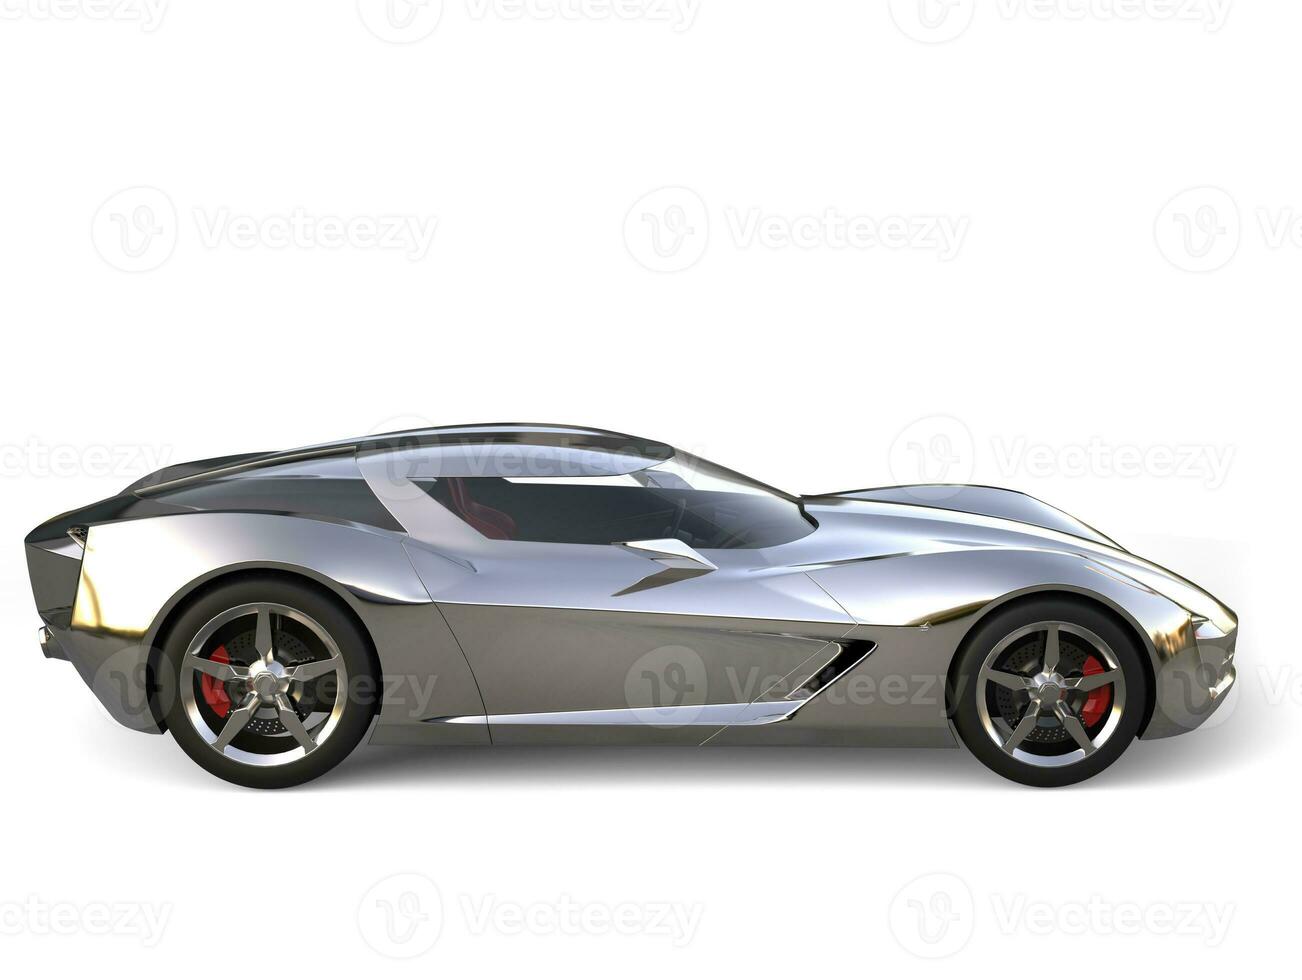 mooi metalen super sport- concept auto - kant visie foto